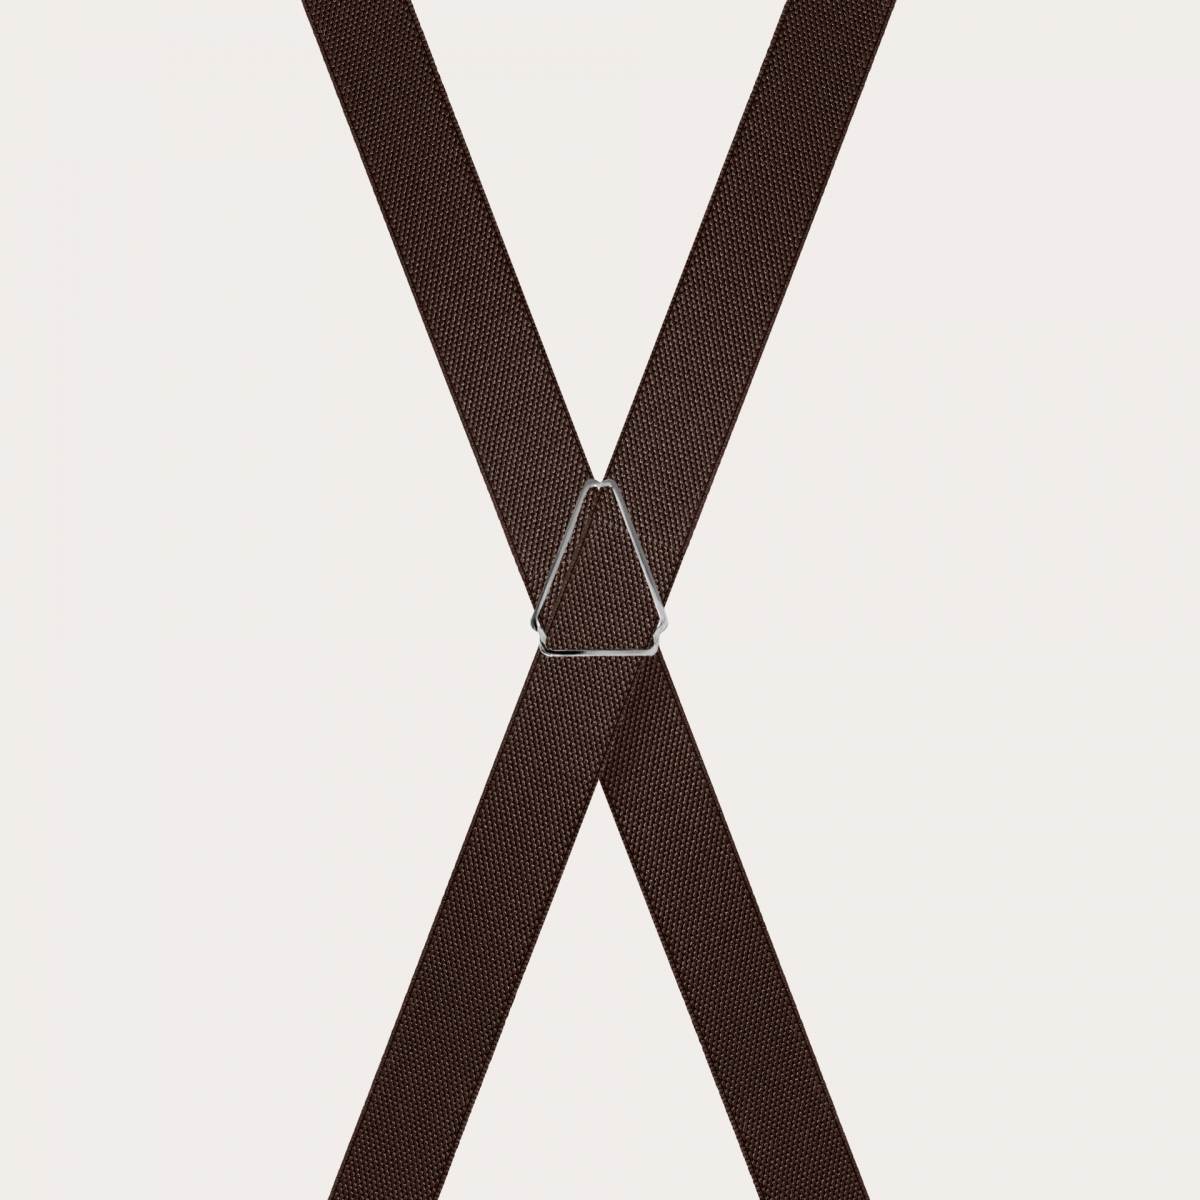 BRUCLE Tirantes finos unisex en forma de X, marrón oscuro